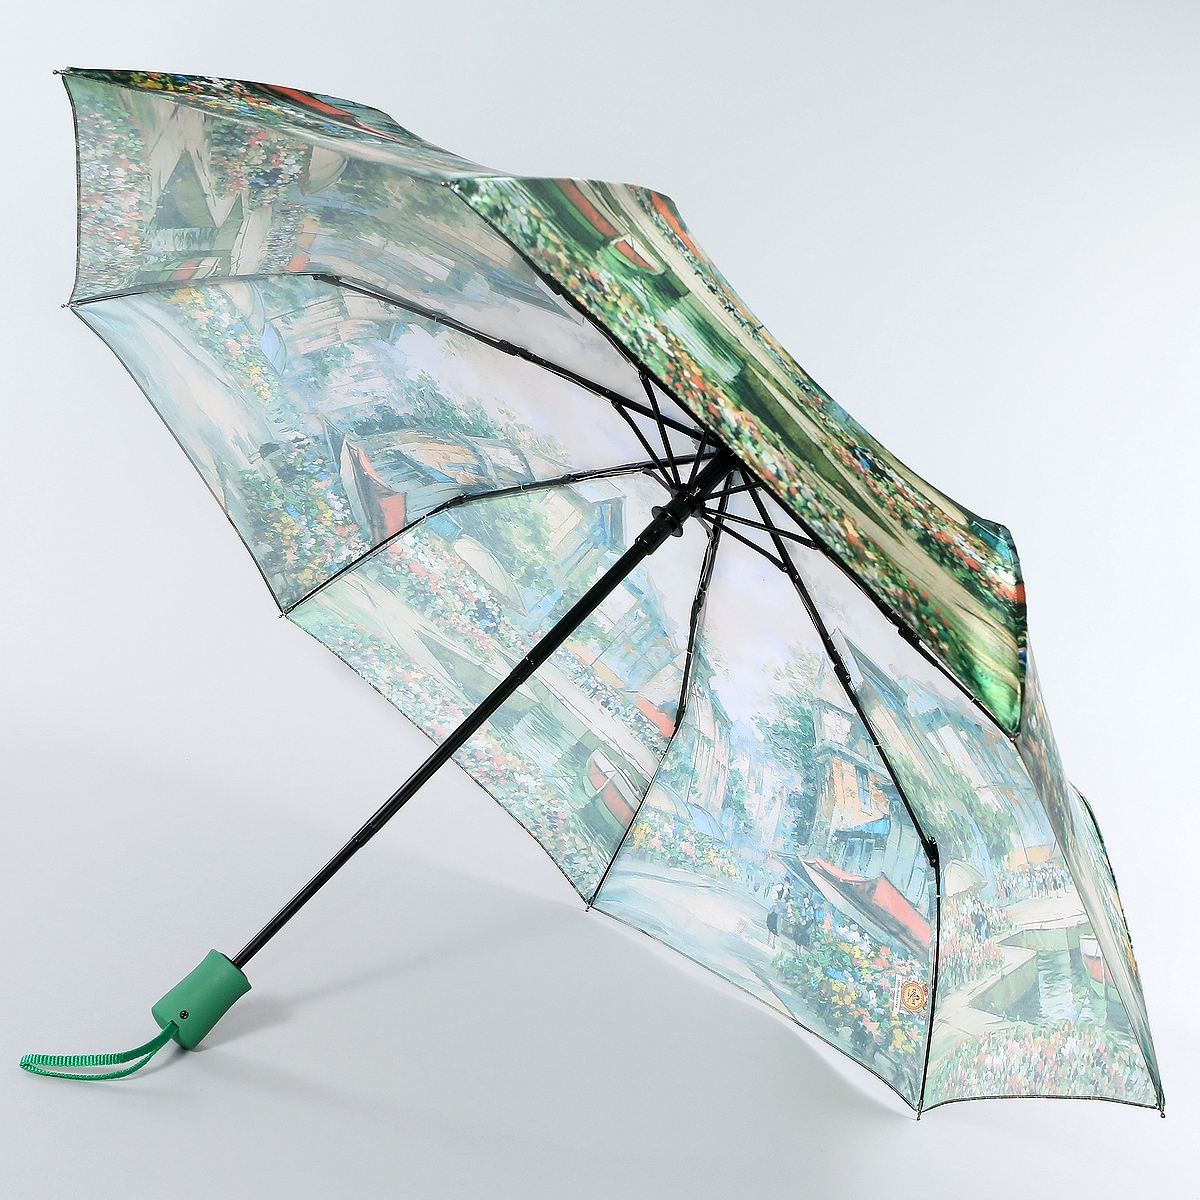 Купить зонтик женский прочный. Trust 32472 зонт. Зонт женский Trust. Trust 32472 зонт бабочки. Зонт фирмы Trust артикул 30472.